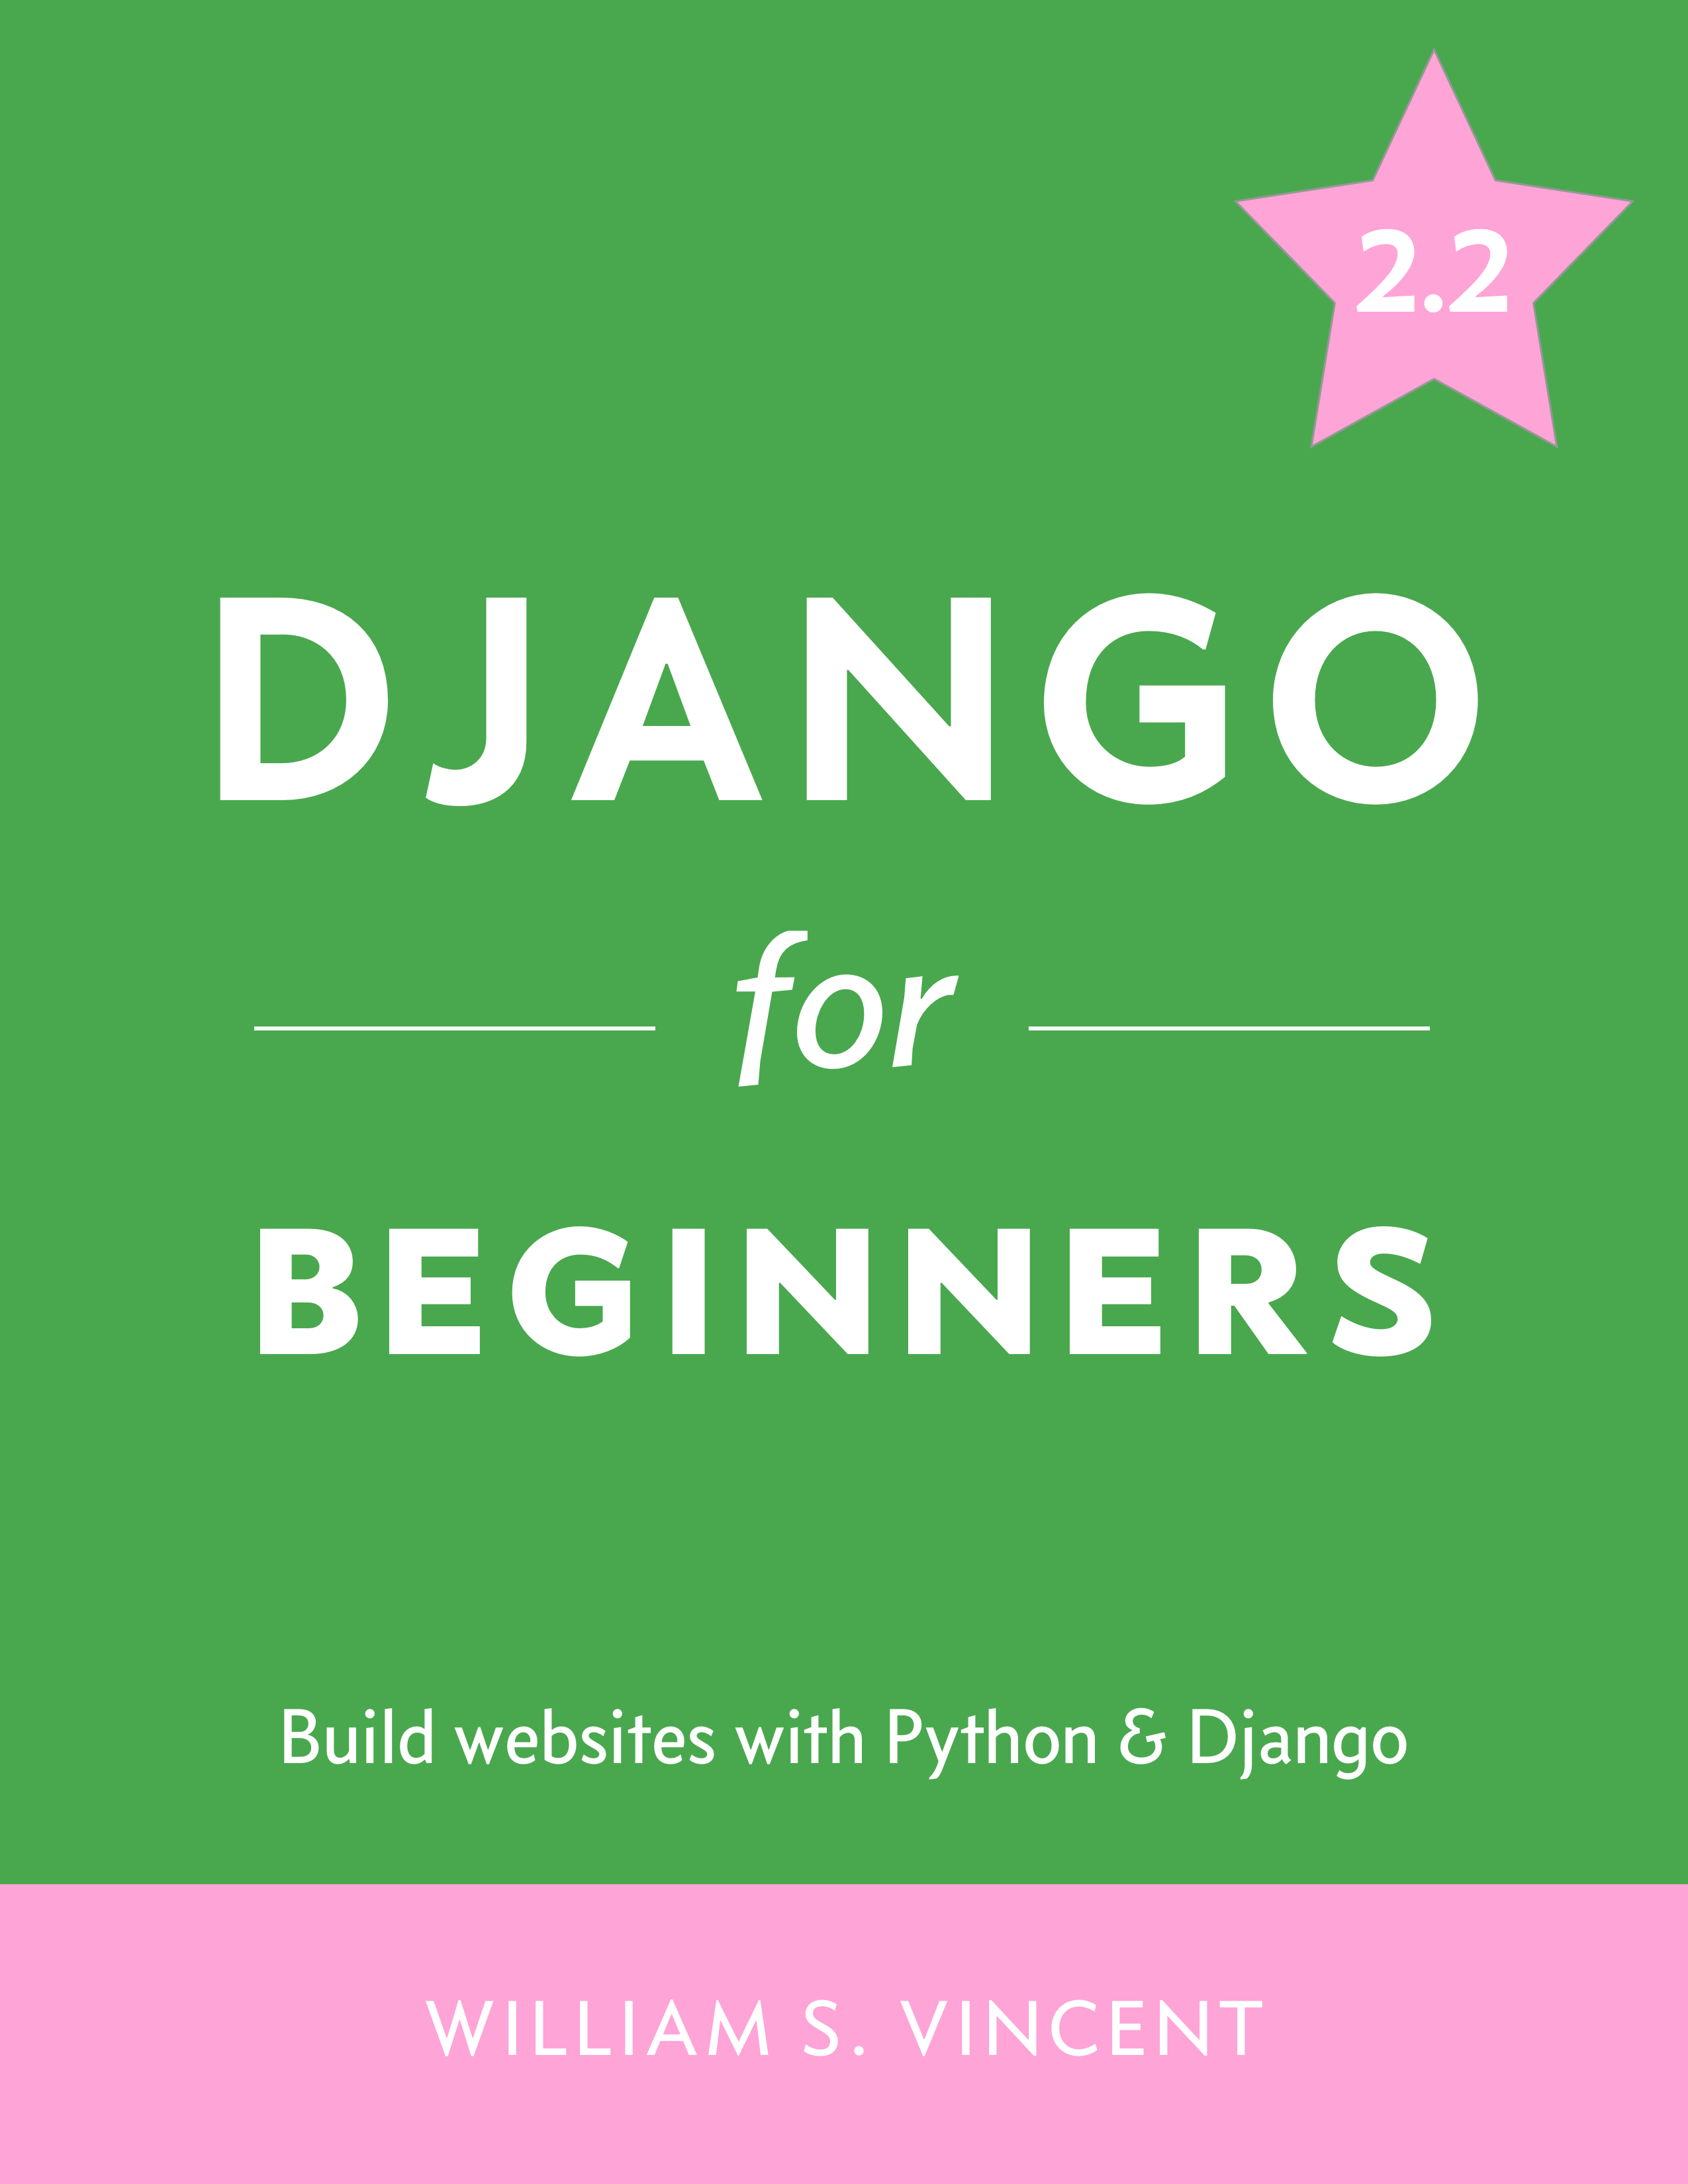 django tutorial pdf deutsch